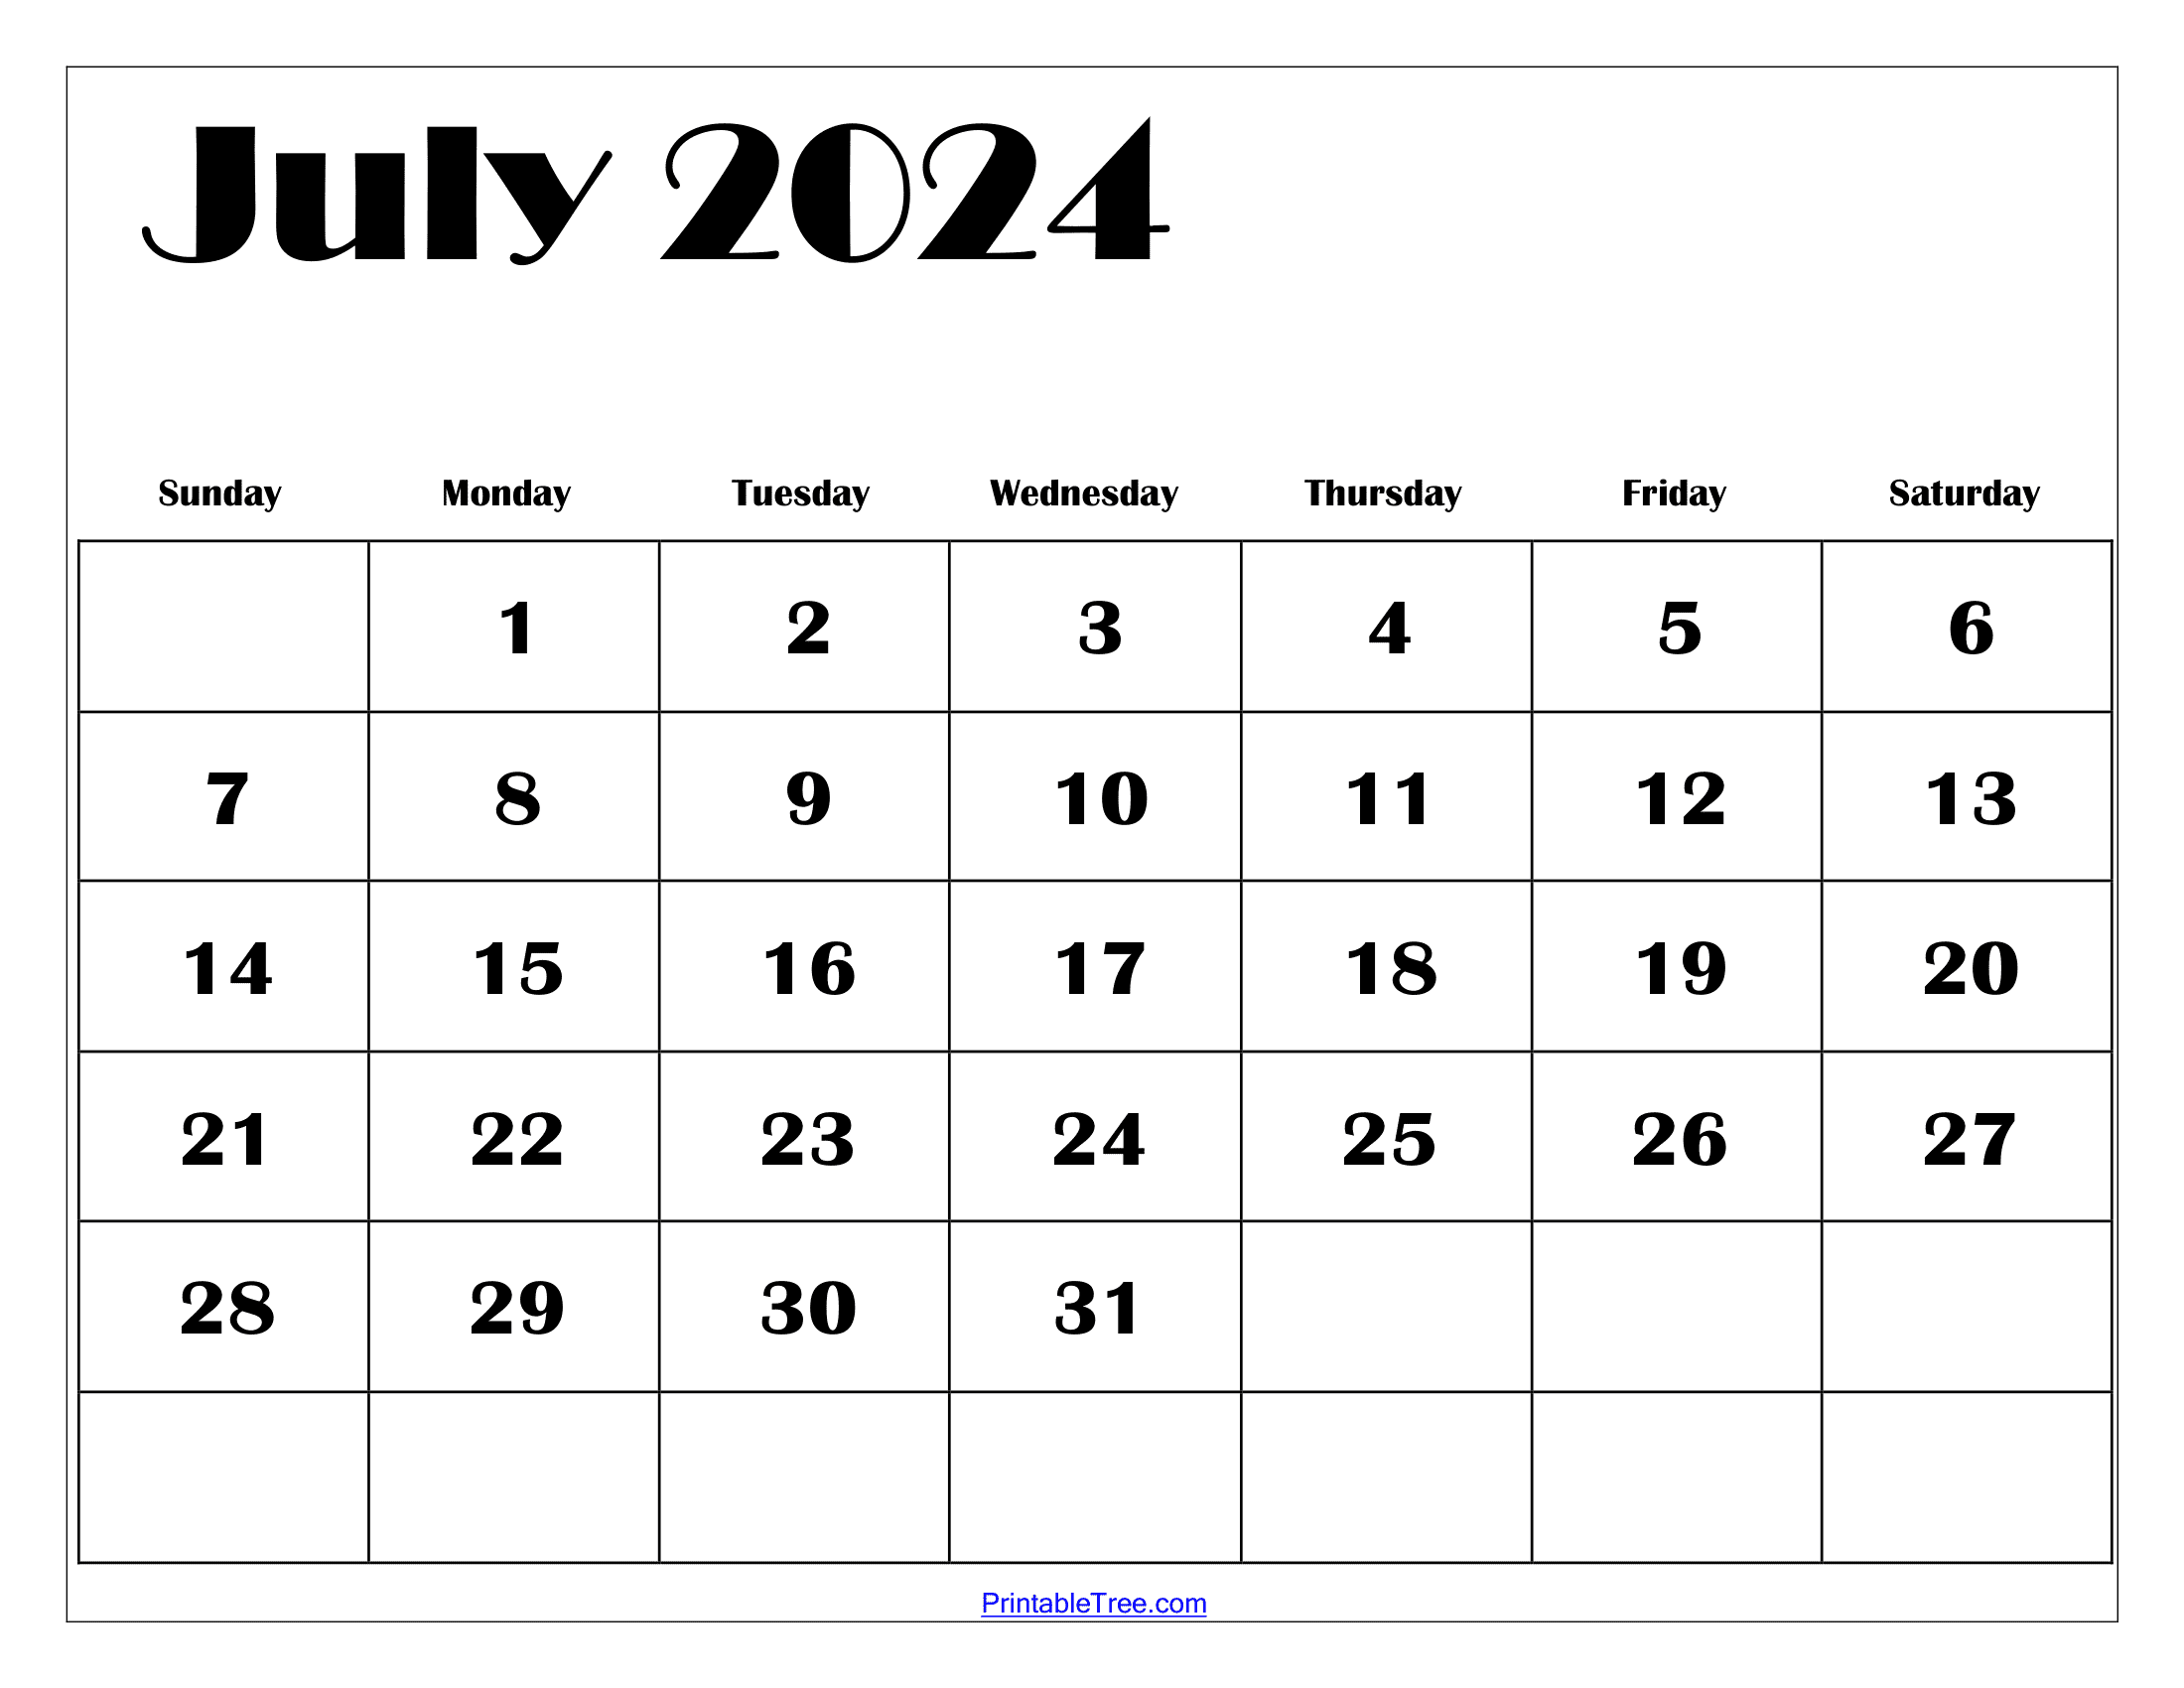 July 2024 Calendar Printable Pdf With Holidays Free Template for Free July 2024 Calendar Printable